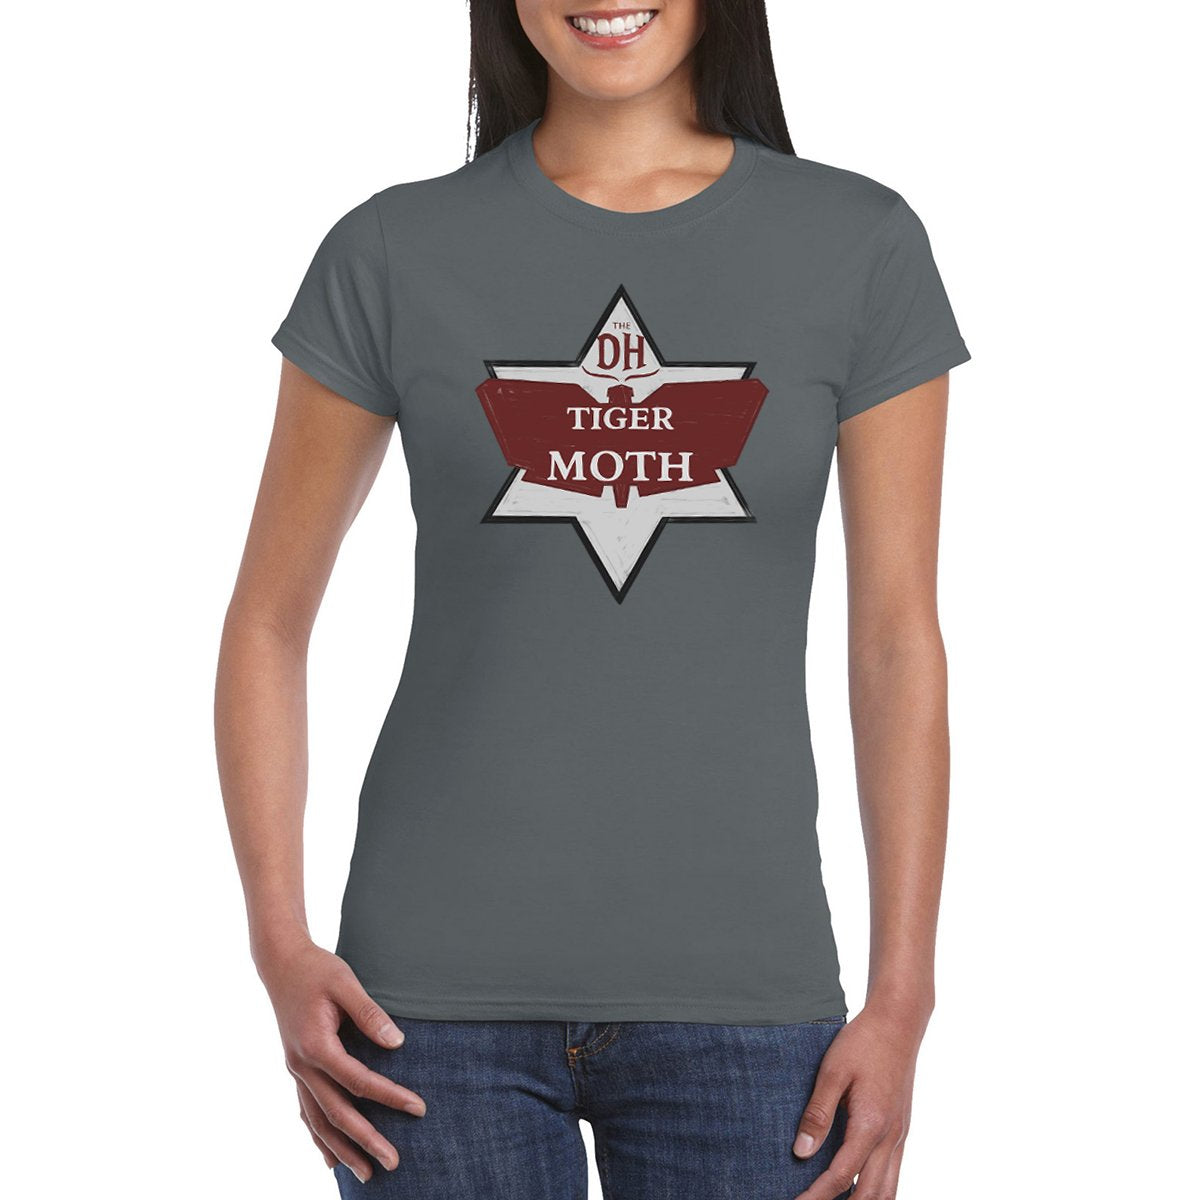 TIGERMOTH LOGO Vintage Women's T-Shirt